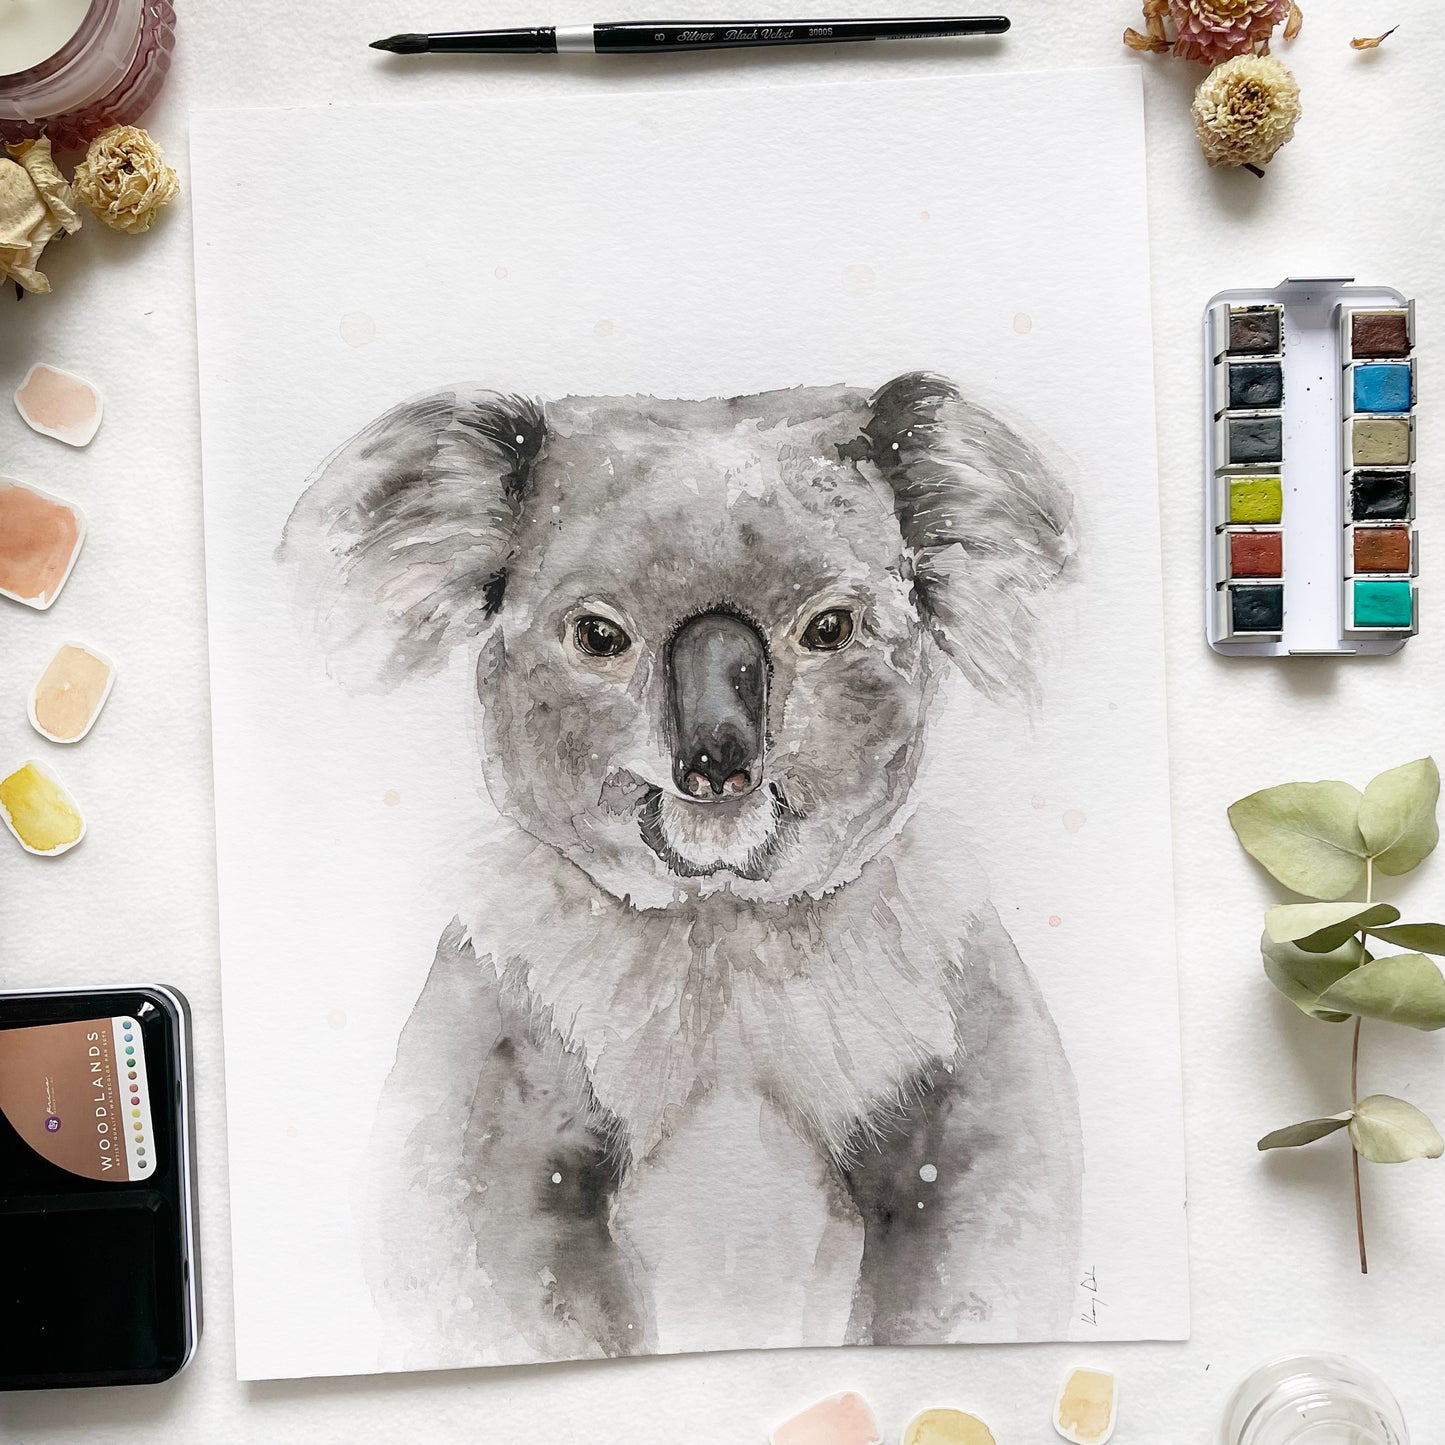 Koala Portré // Koala Portrait